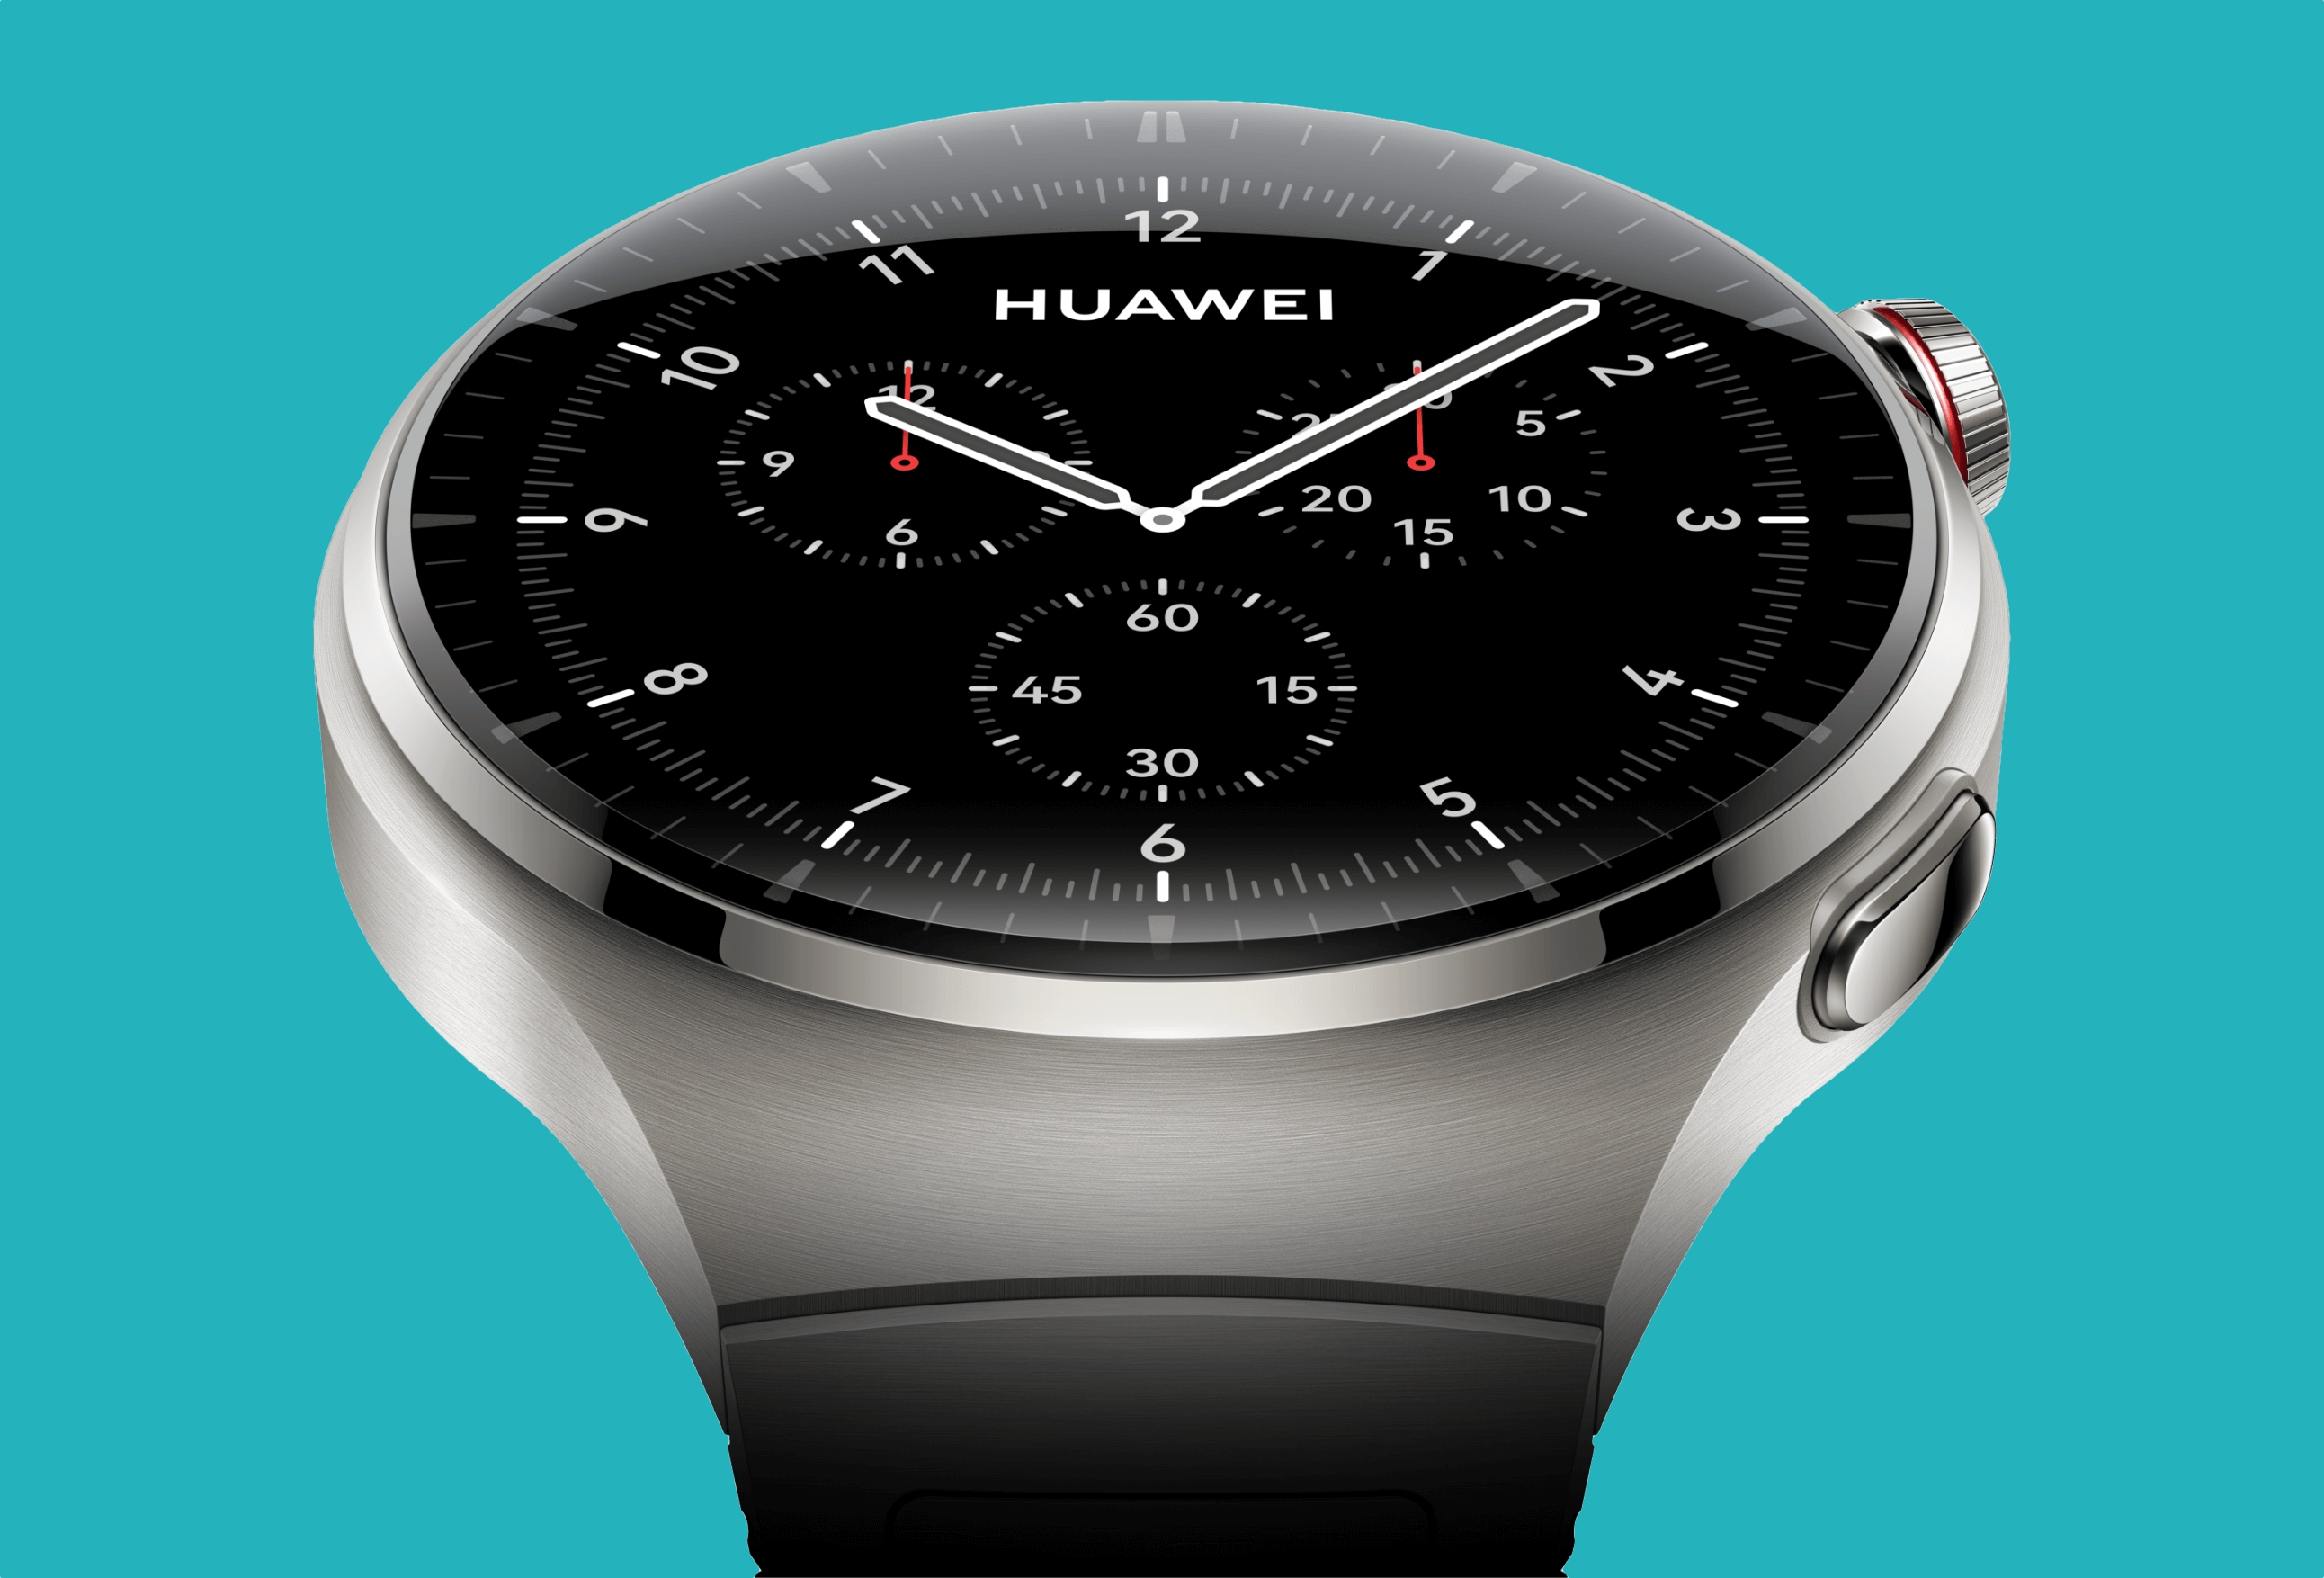 Huawei lanserer en ny smartklokke på det globale markedet 14. september.